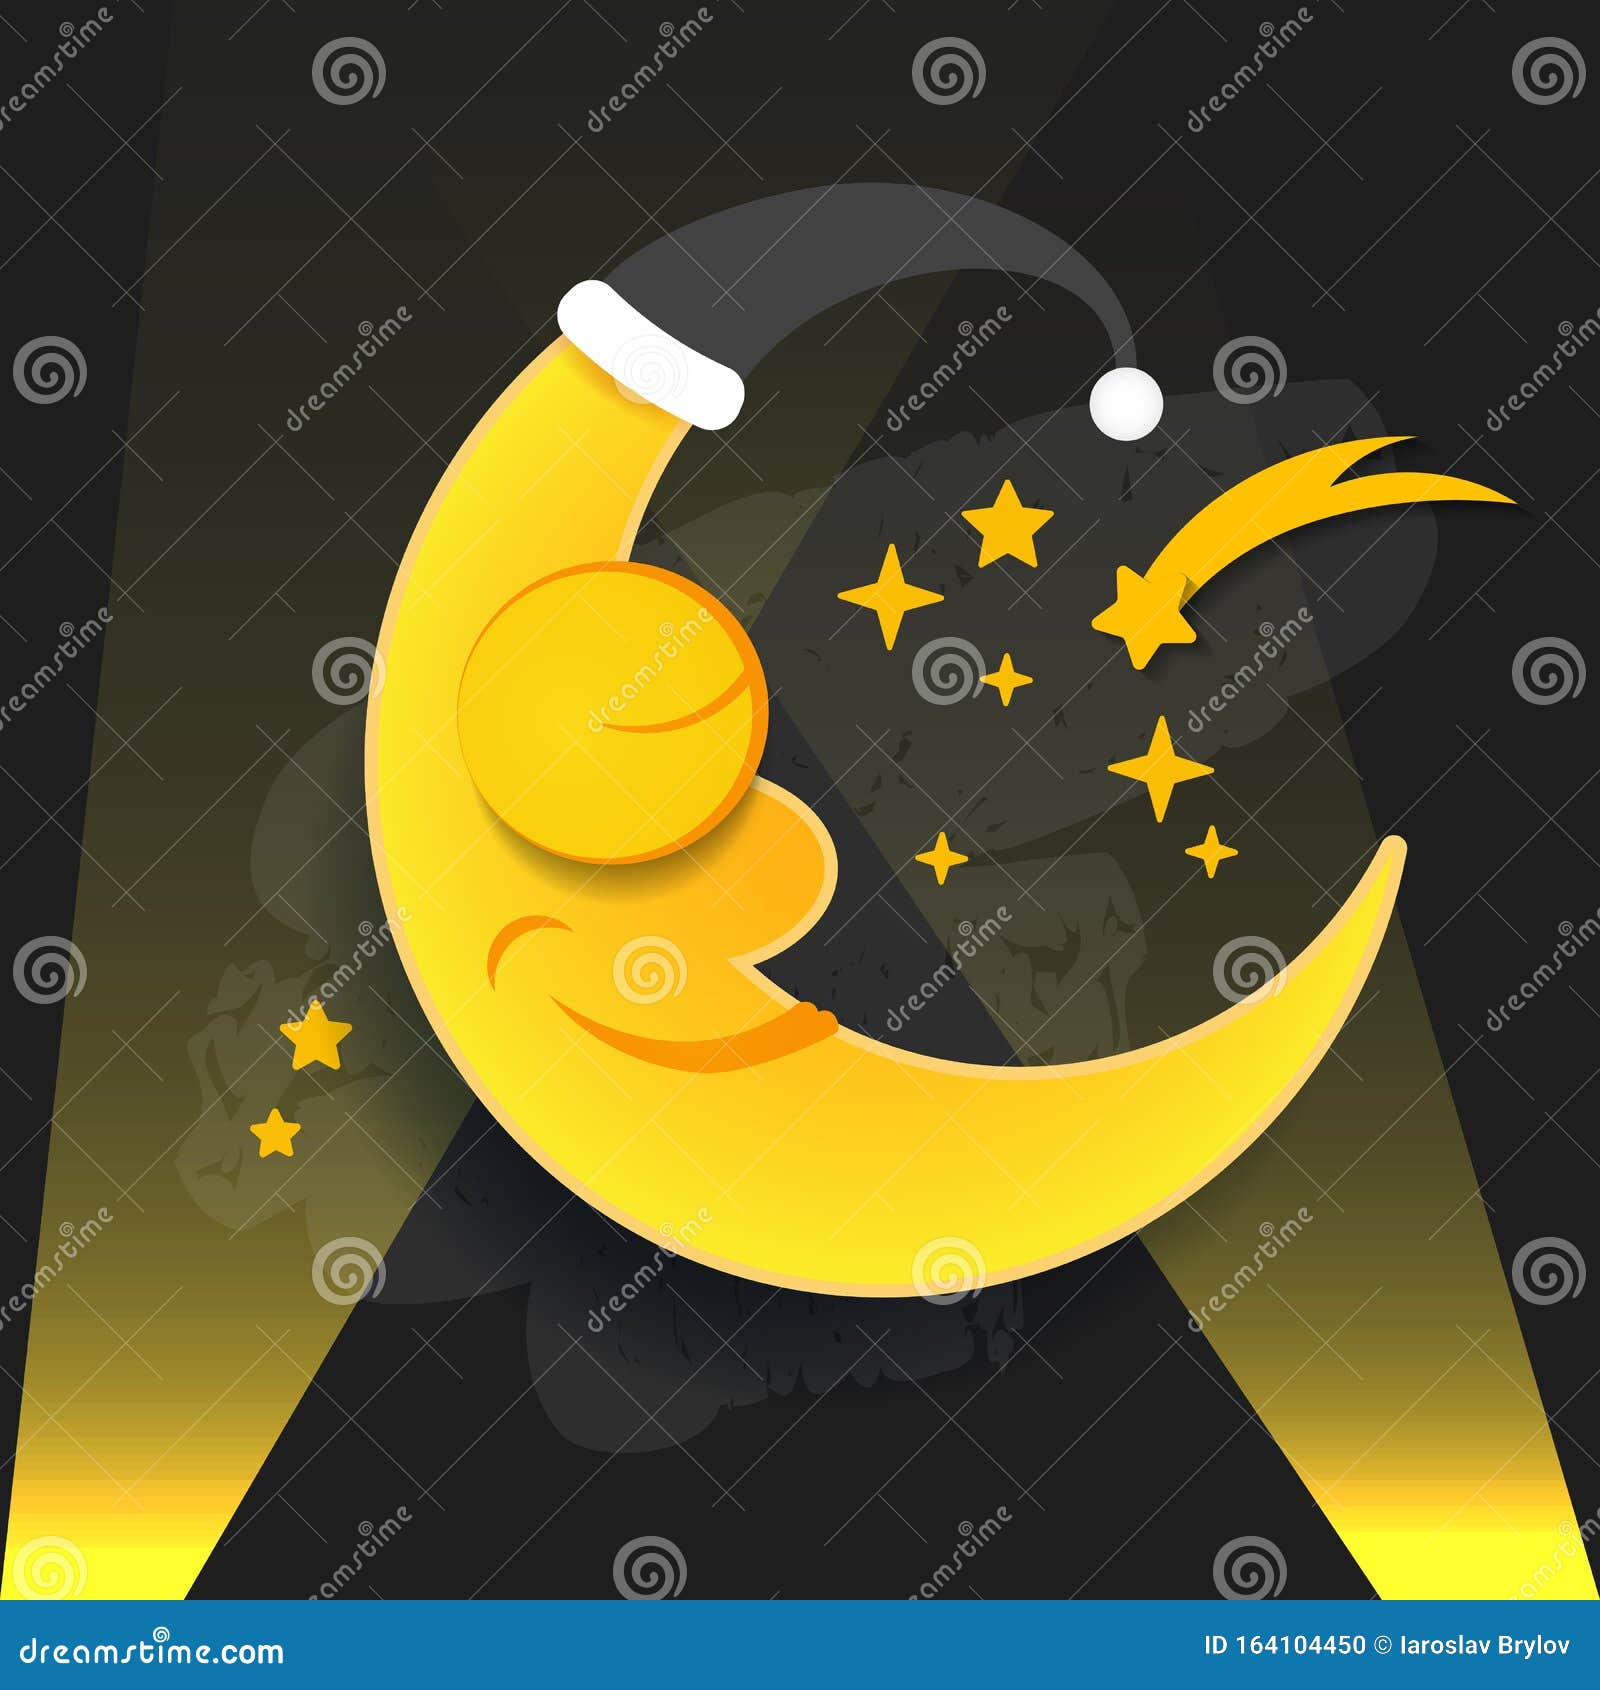 Vector Illustration of Sleeping Smiling Moon in the Nightcap Stock ...